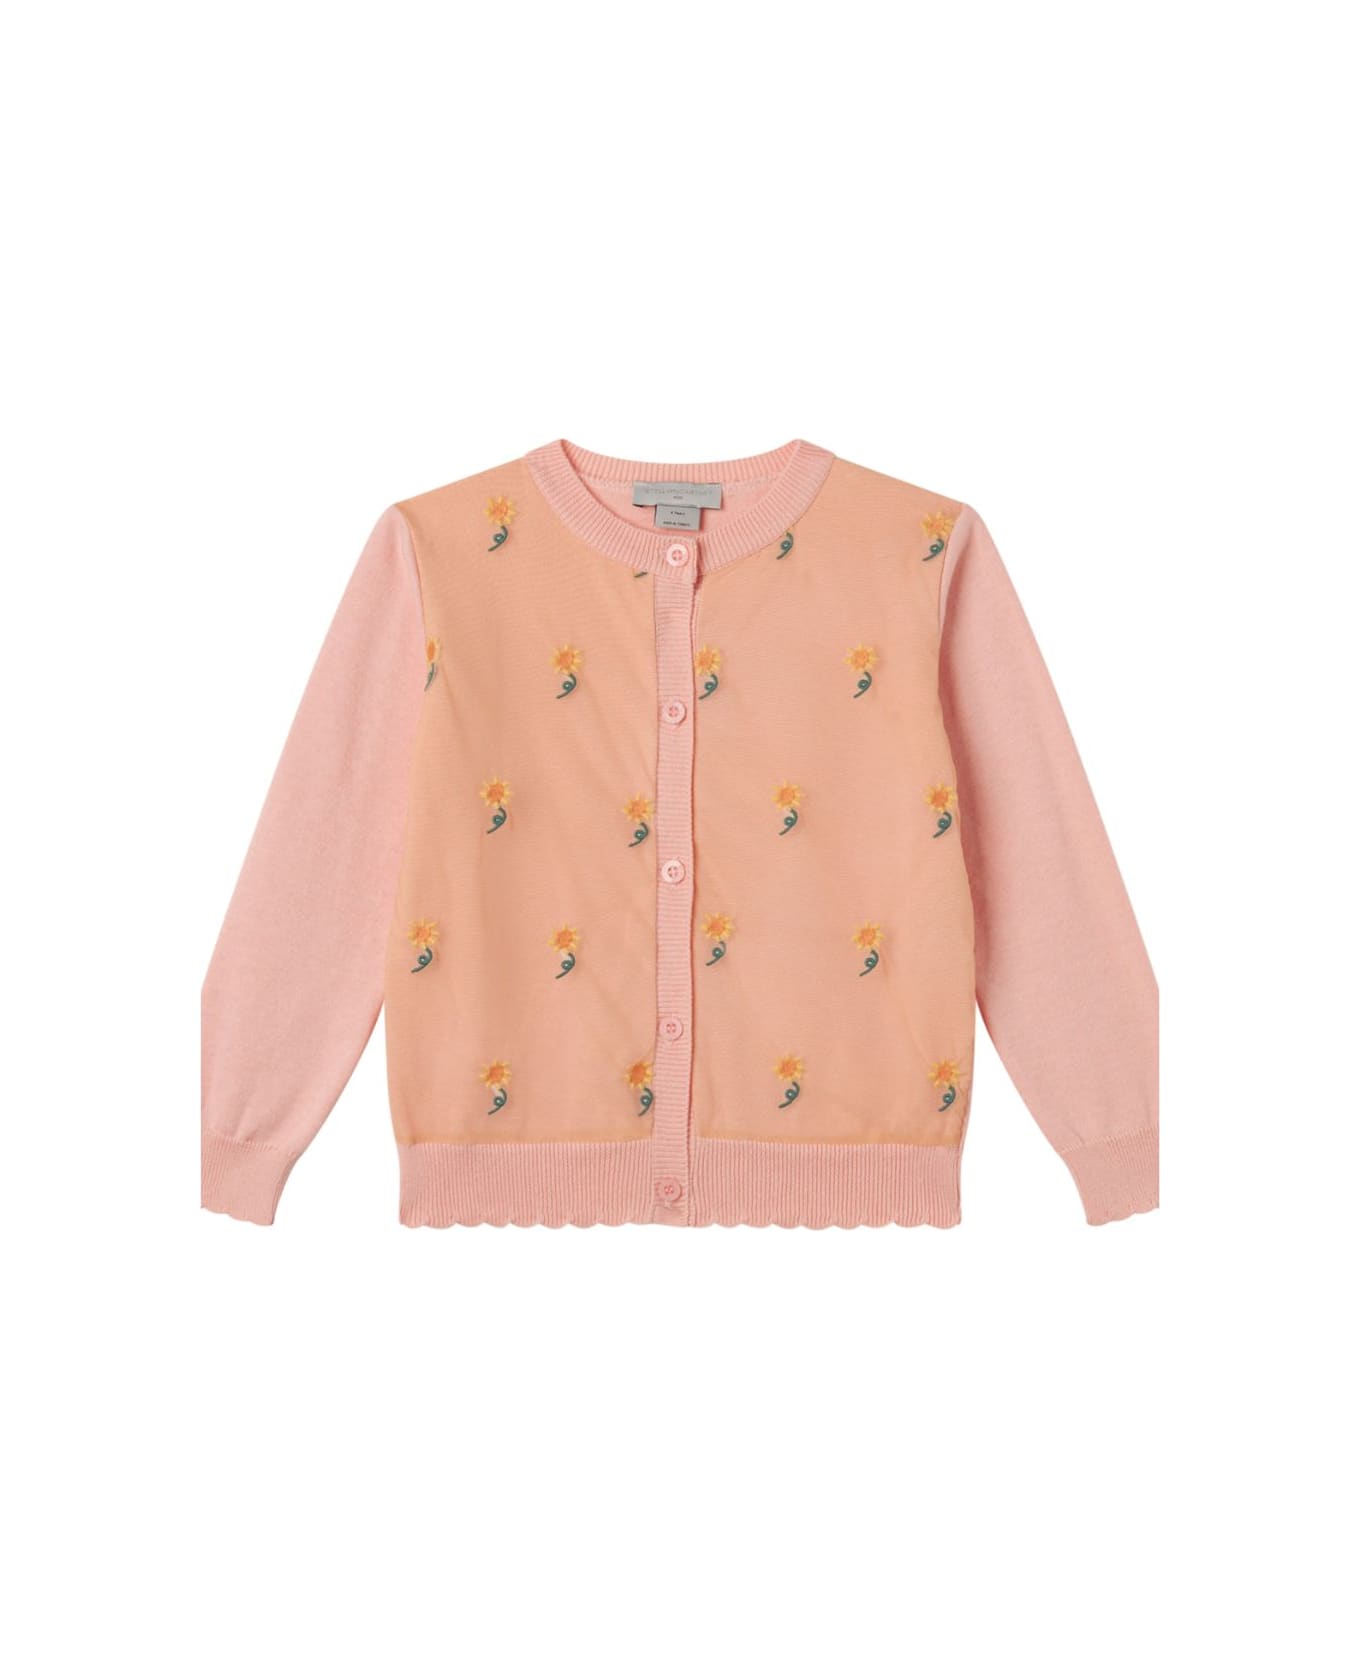 Stella McCartney Kids Knit Cardigan - Salmon Pink